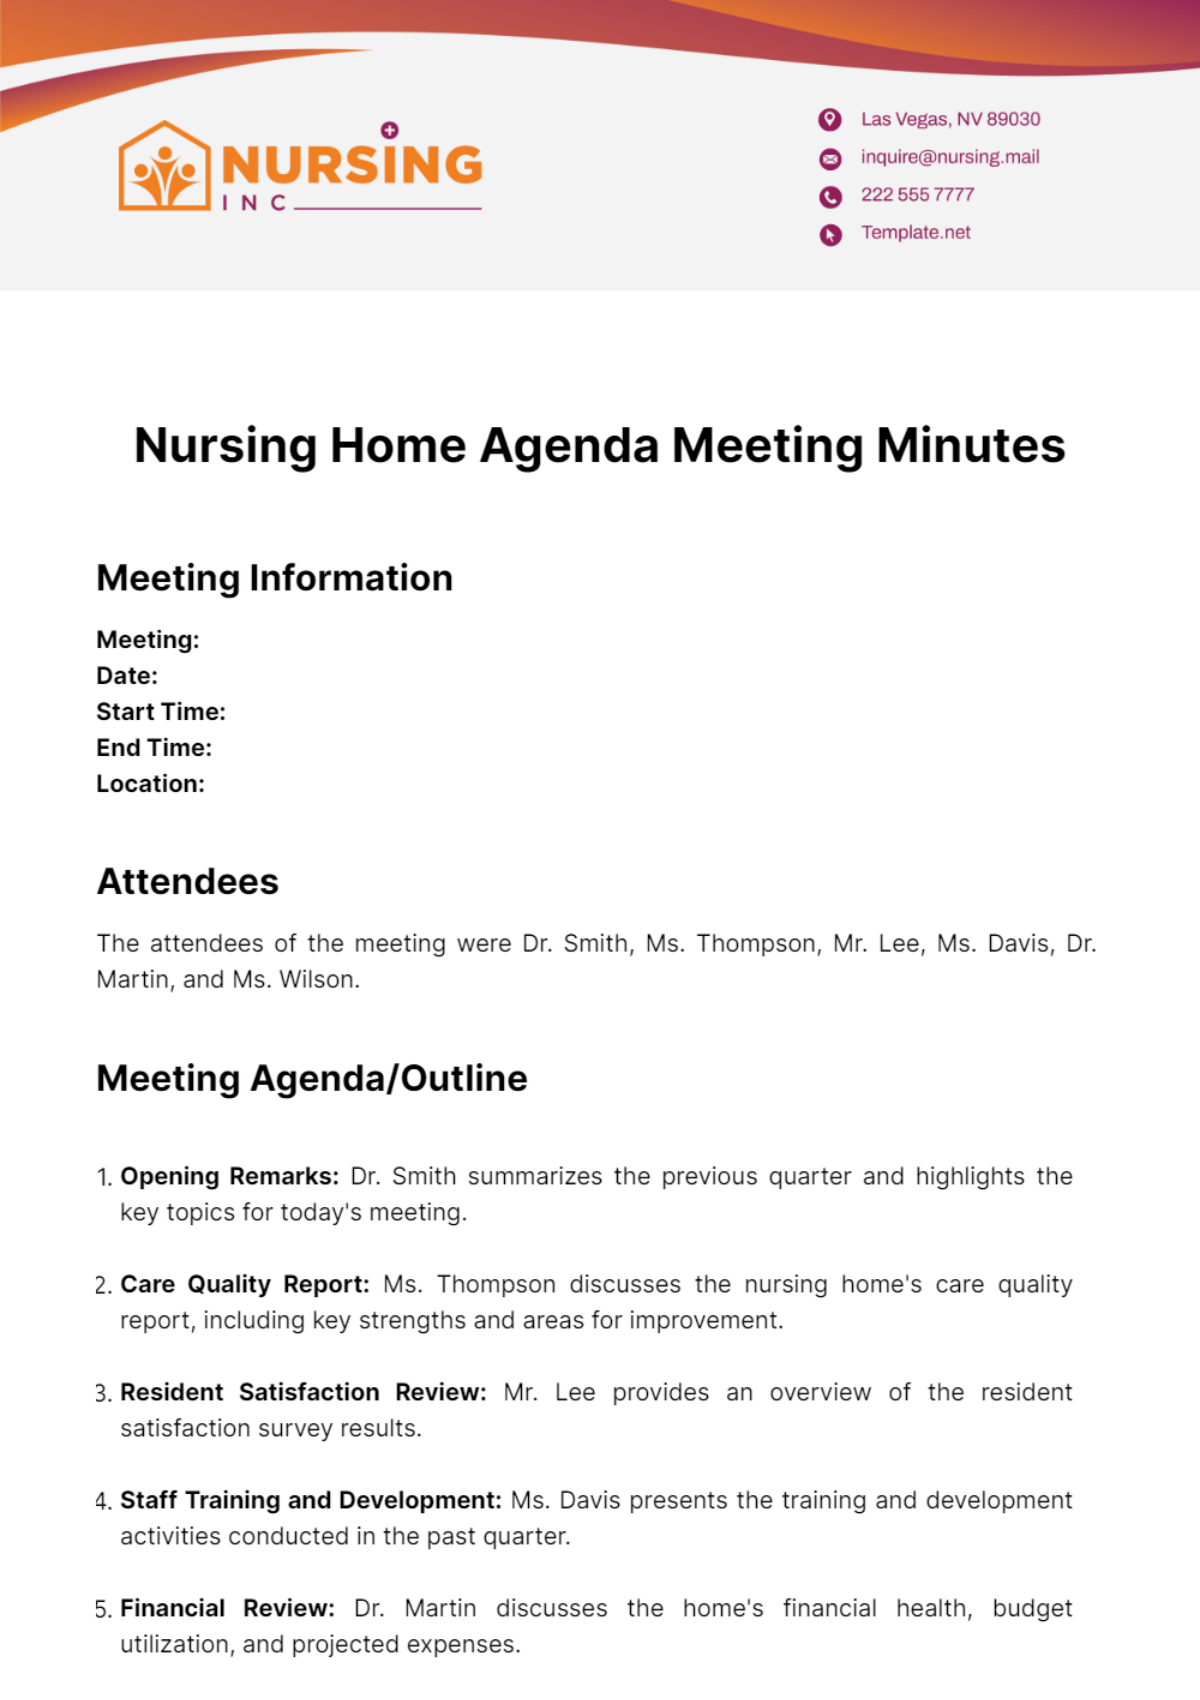 Nursing Home Agenda Meeting Minutes Template